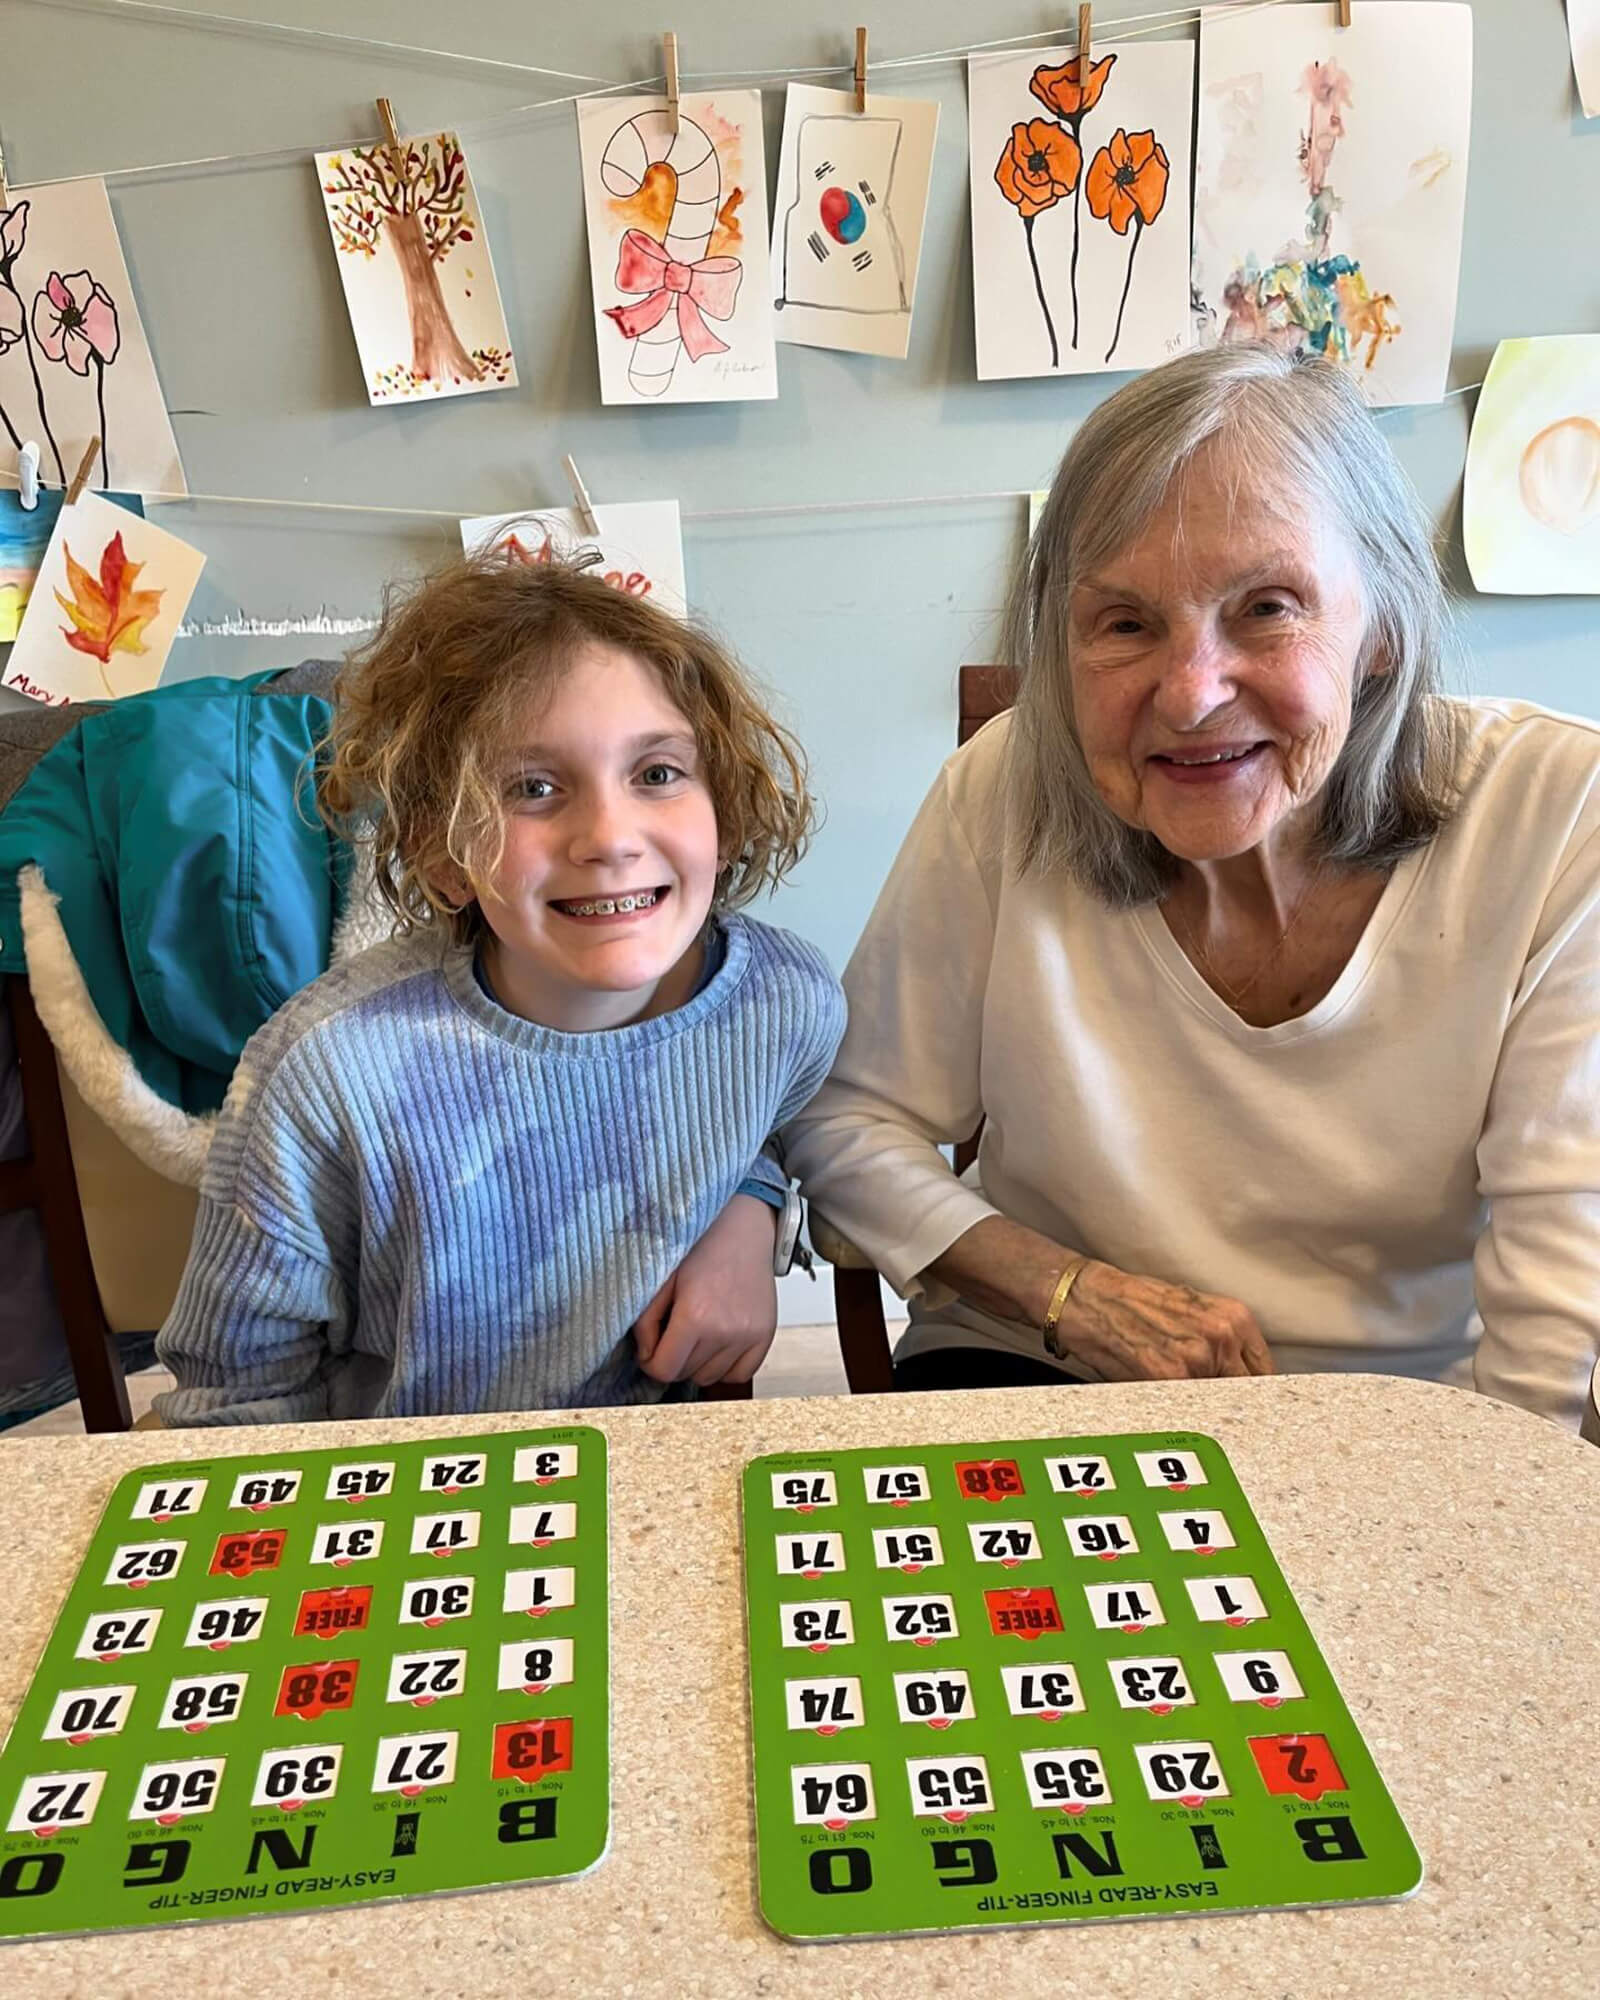 Smiling child and senior woman enjoying a bingo game together in Edina, MN.